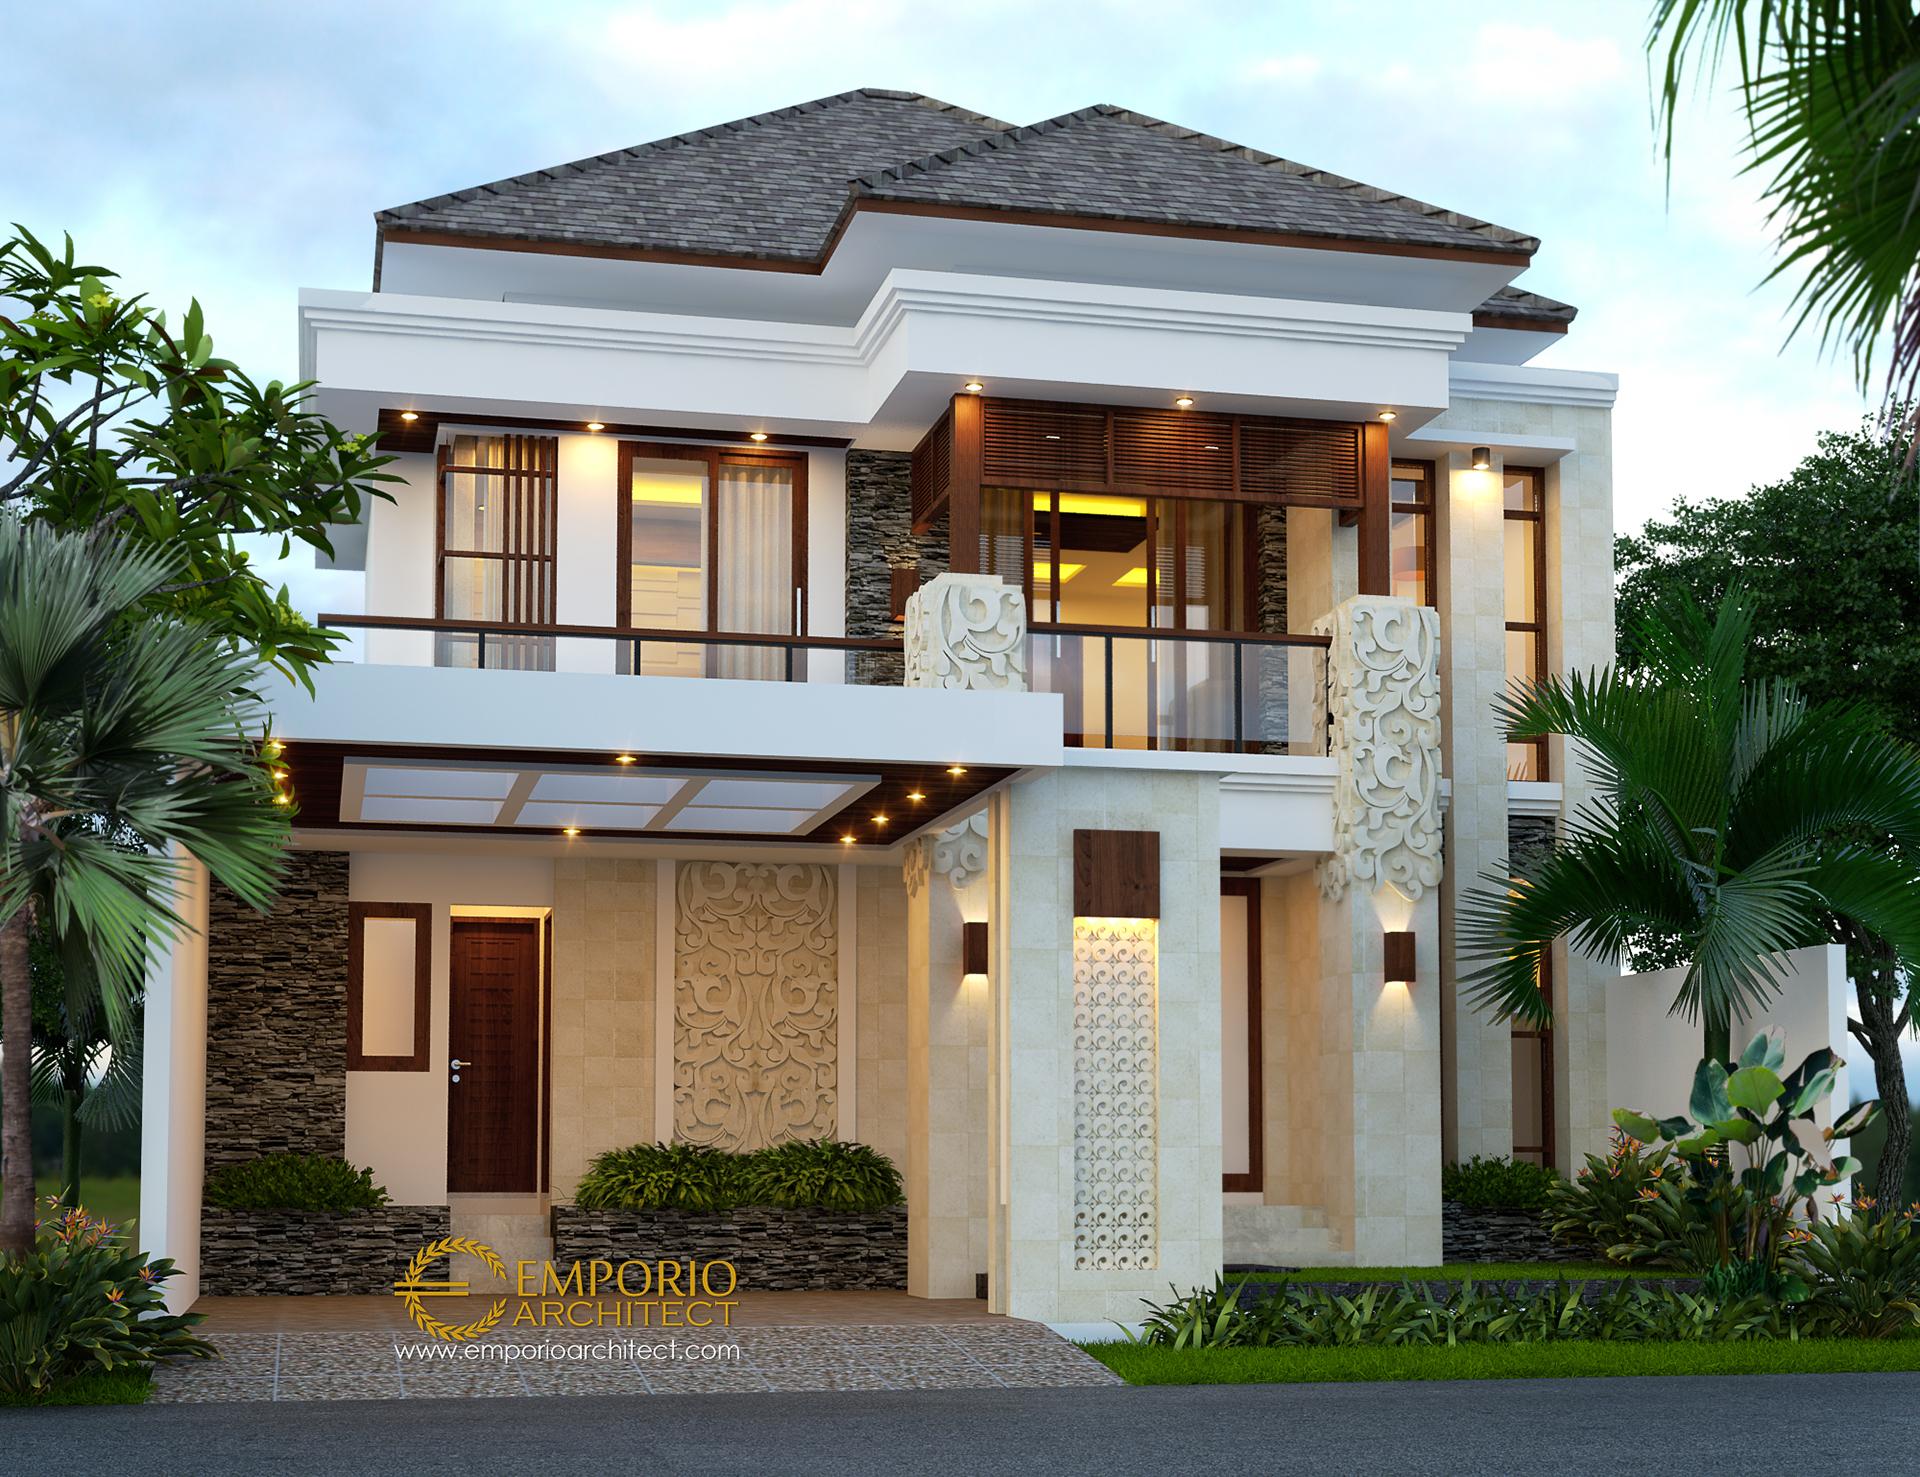 Desain Rumah Villa Bali 2 Lantai Beverly Park Type A38 di Batam